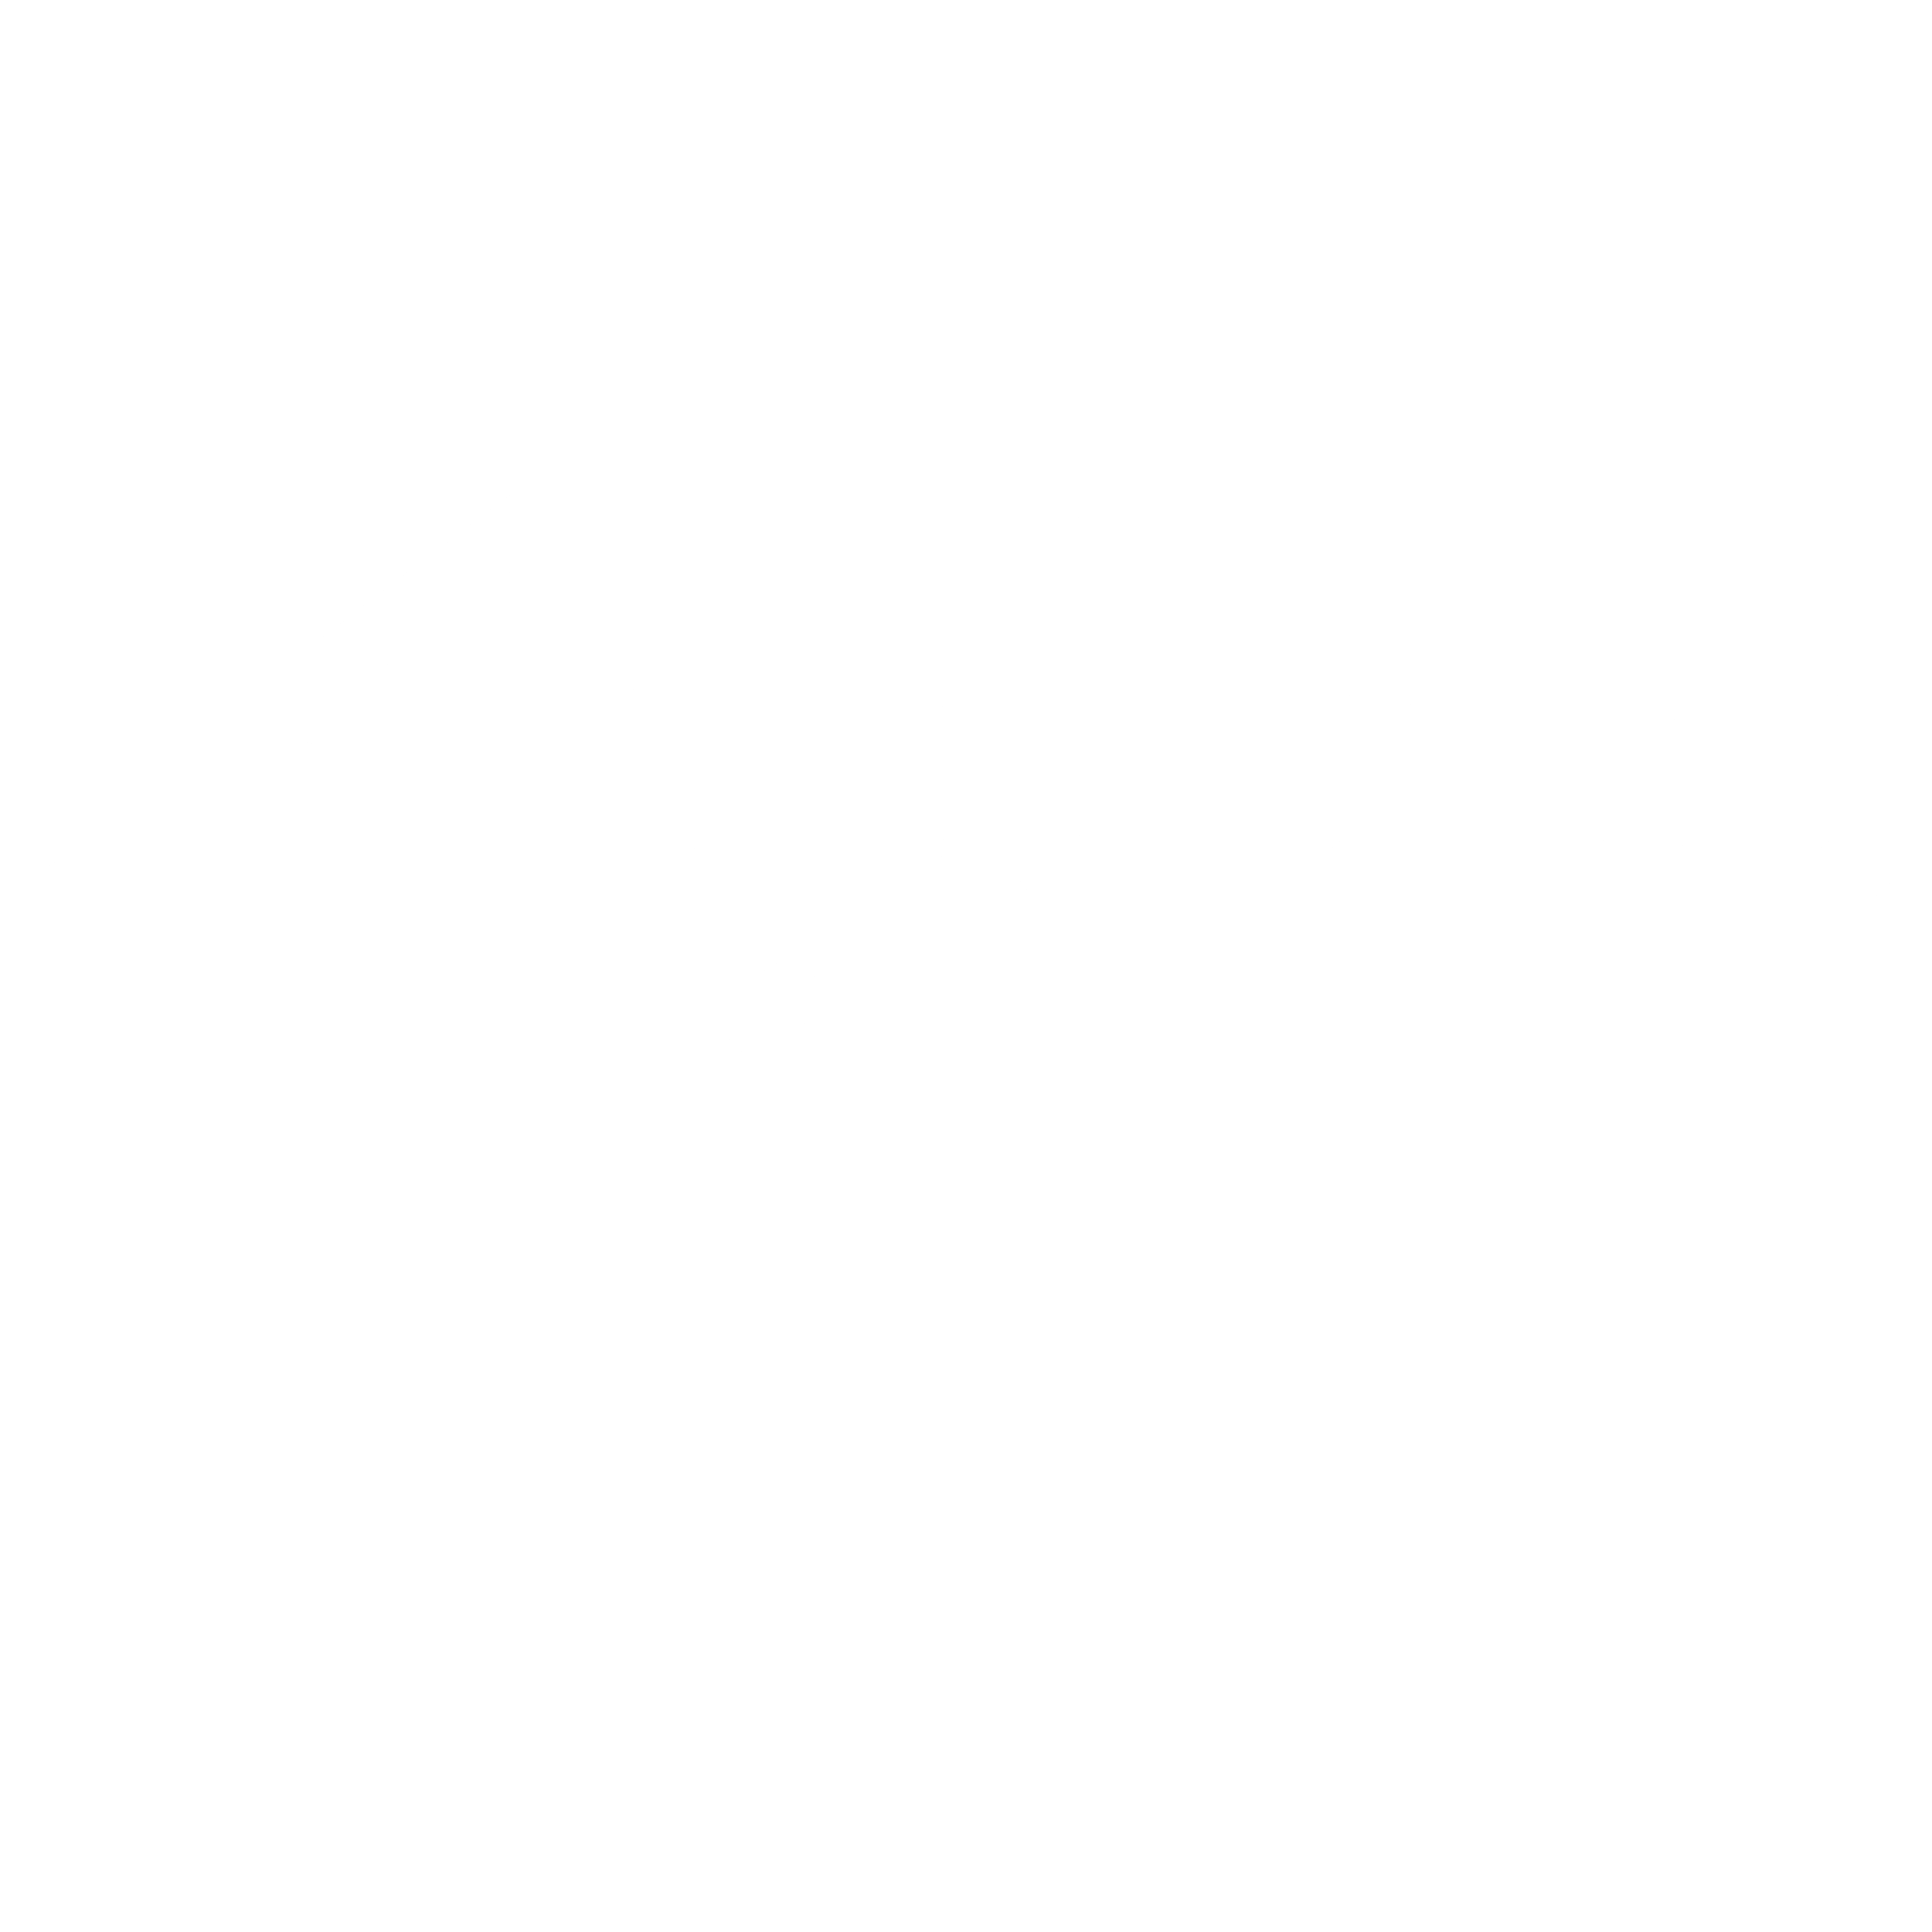 sabic-logo-black-and-white.png